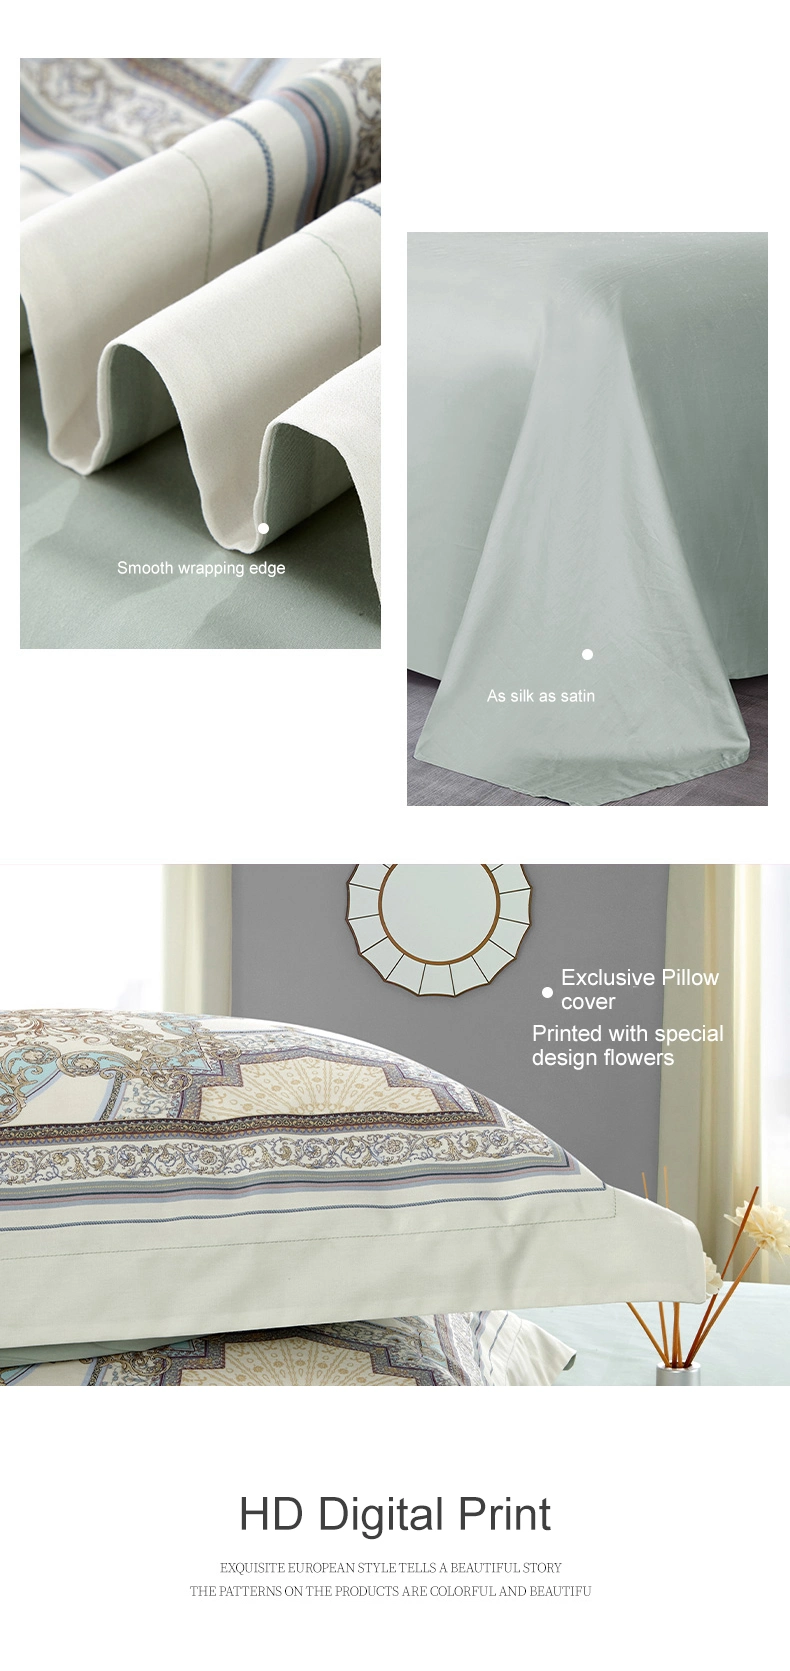 Luxury Exquisite Complete Pattern Supima Cotton European Duvet Sets Double King California King Optional